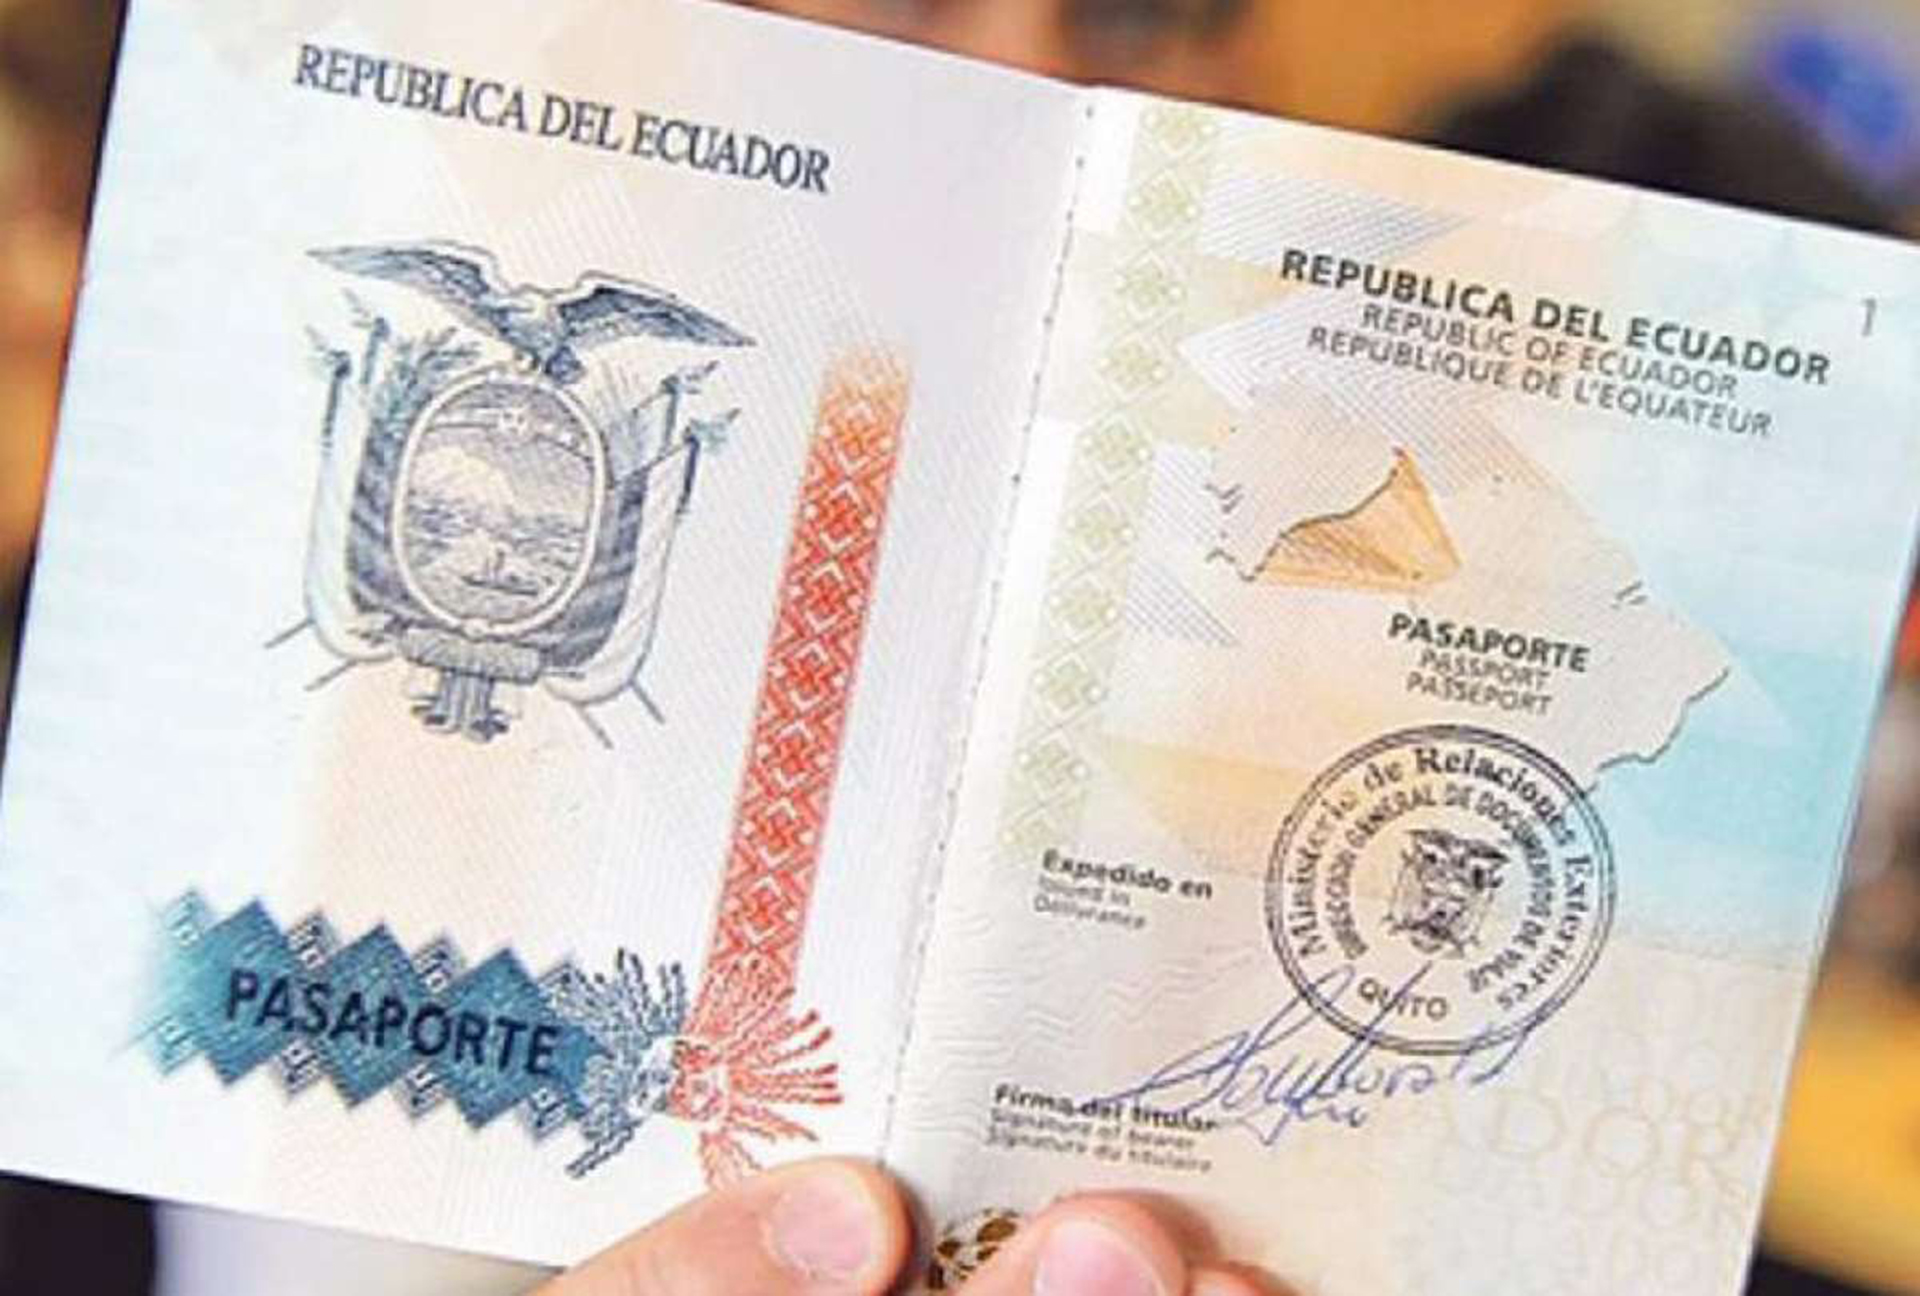 Sacar el pasaporte español